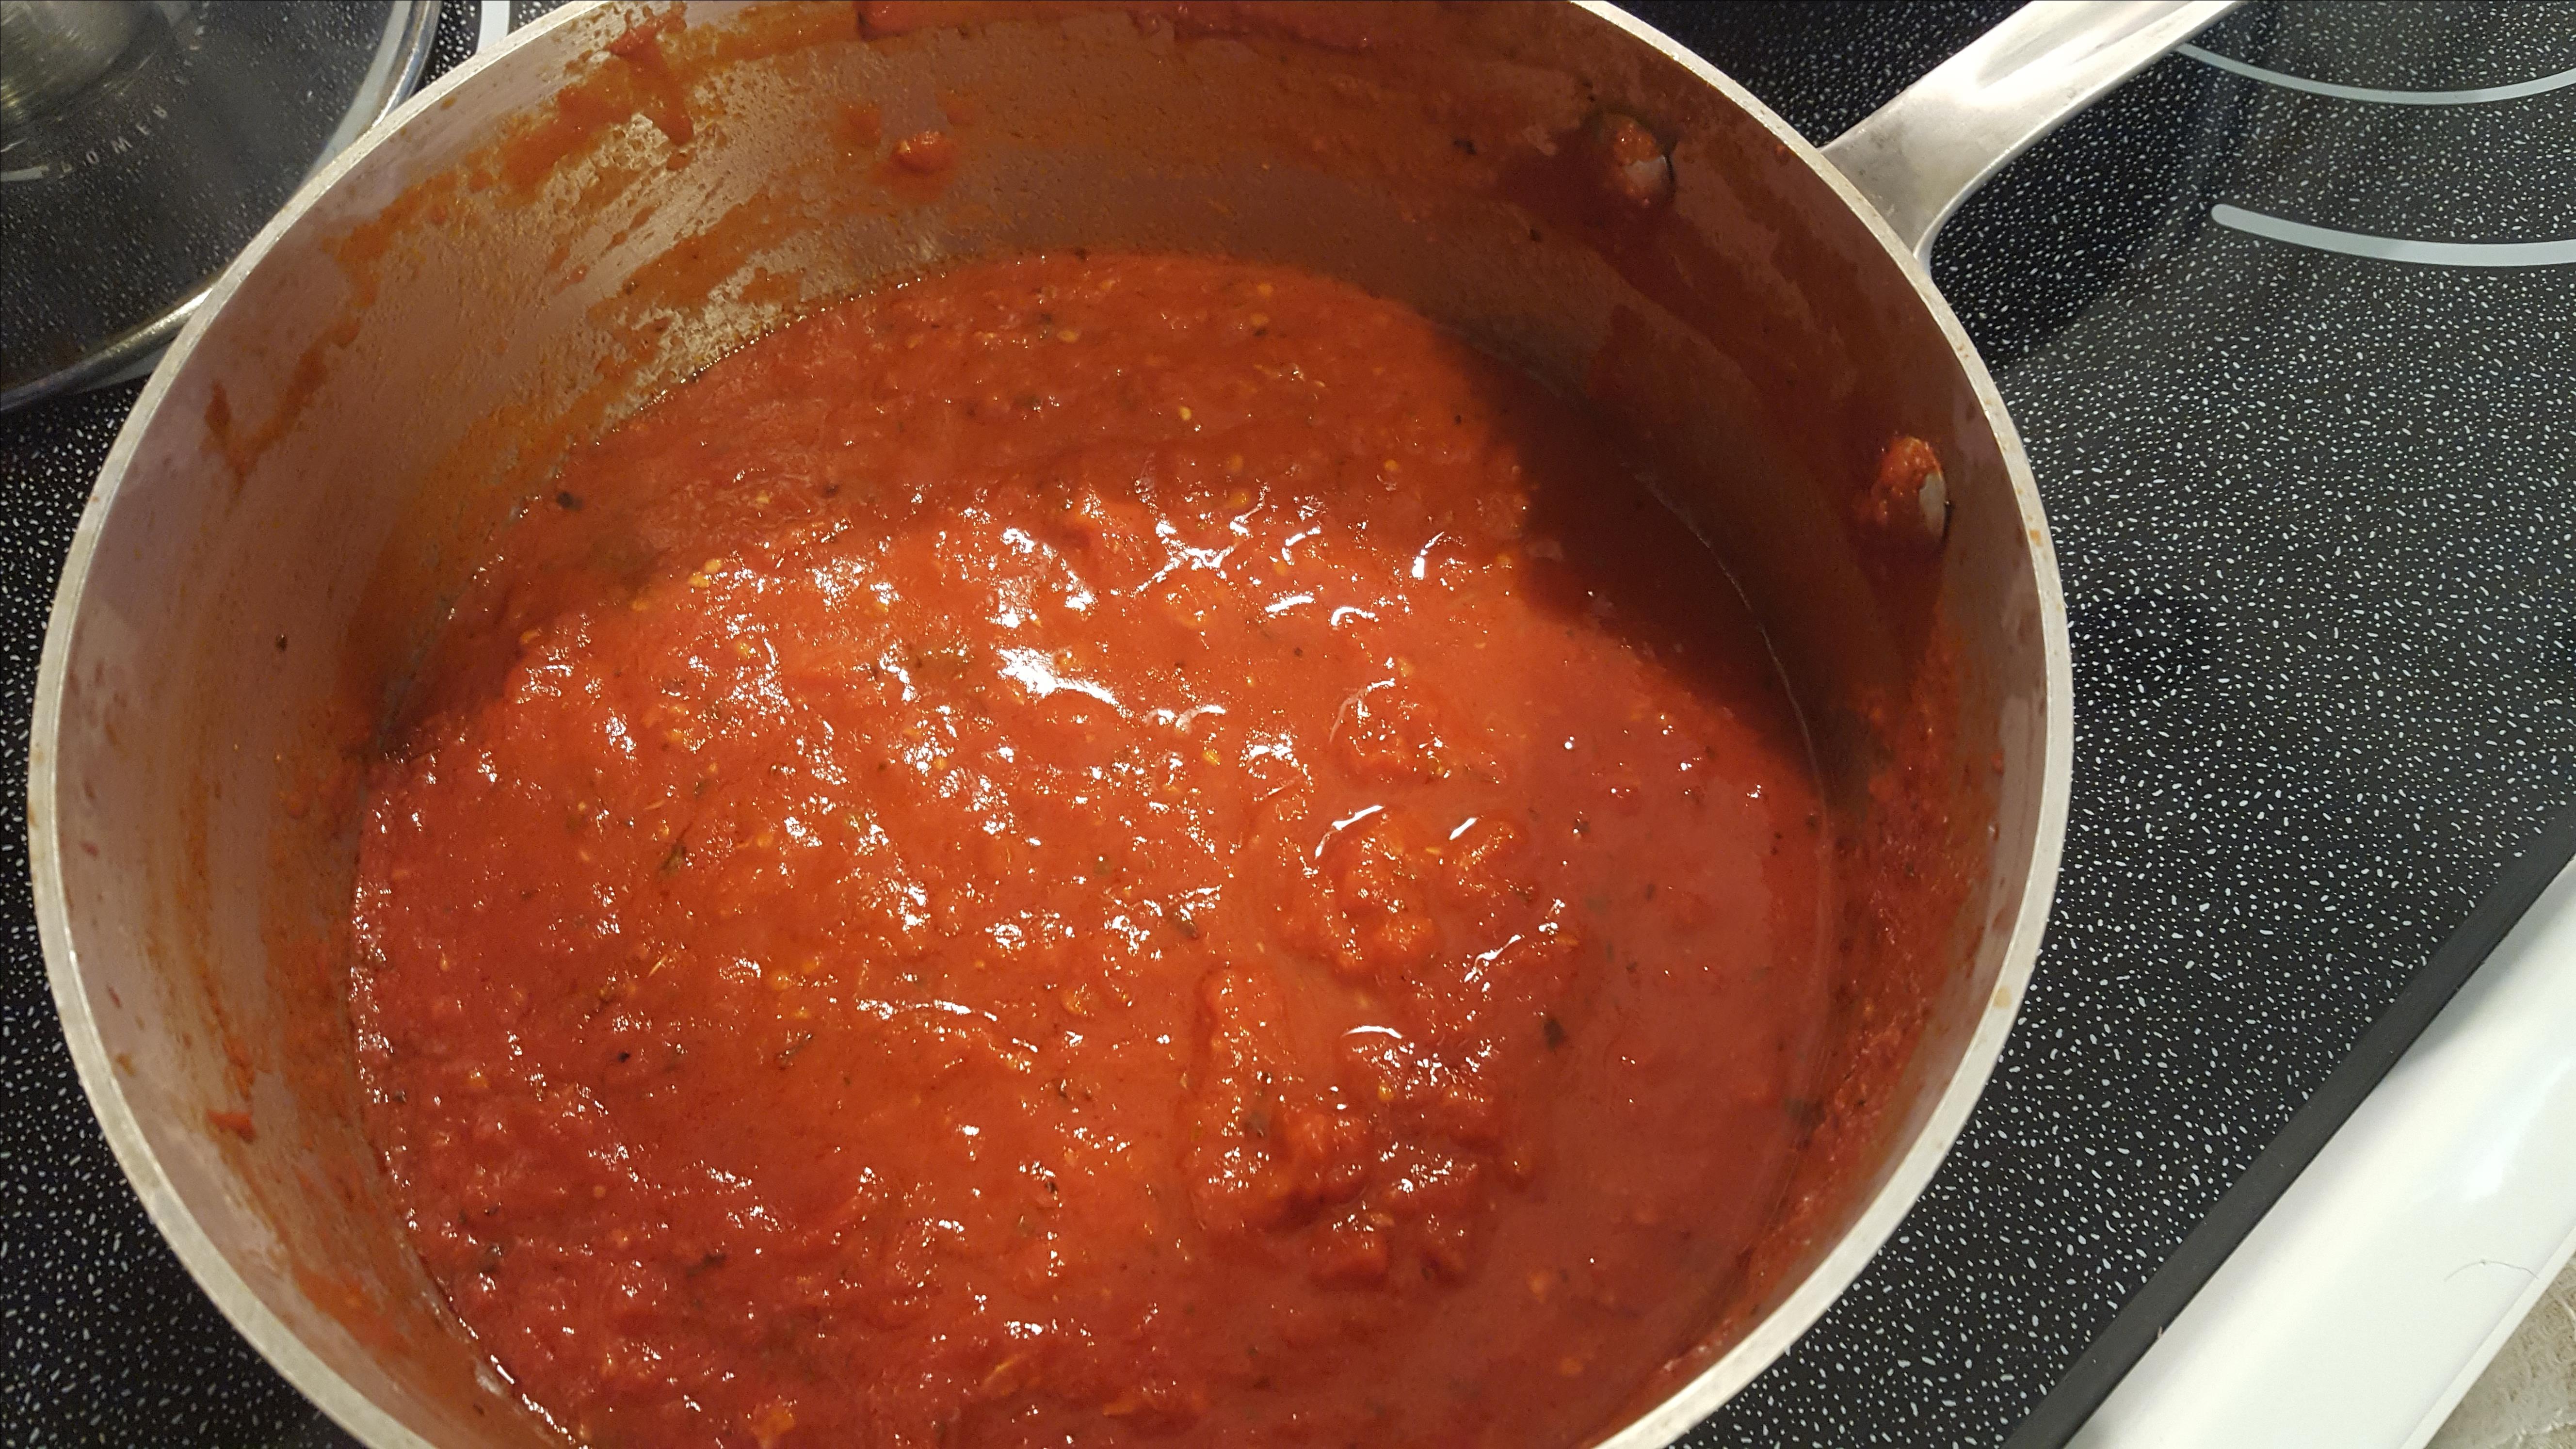 How to Make Homemade Pizza Sauce | Allrecipes